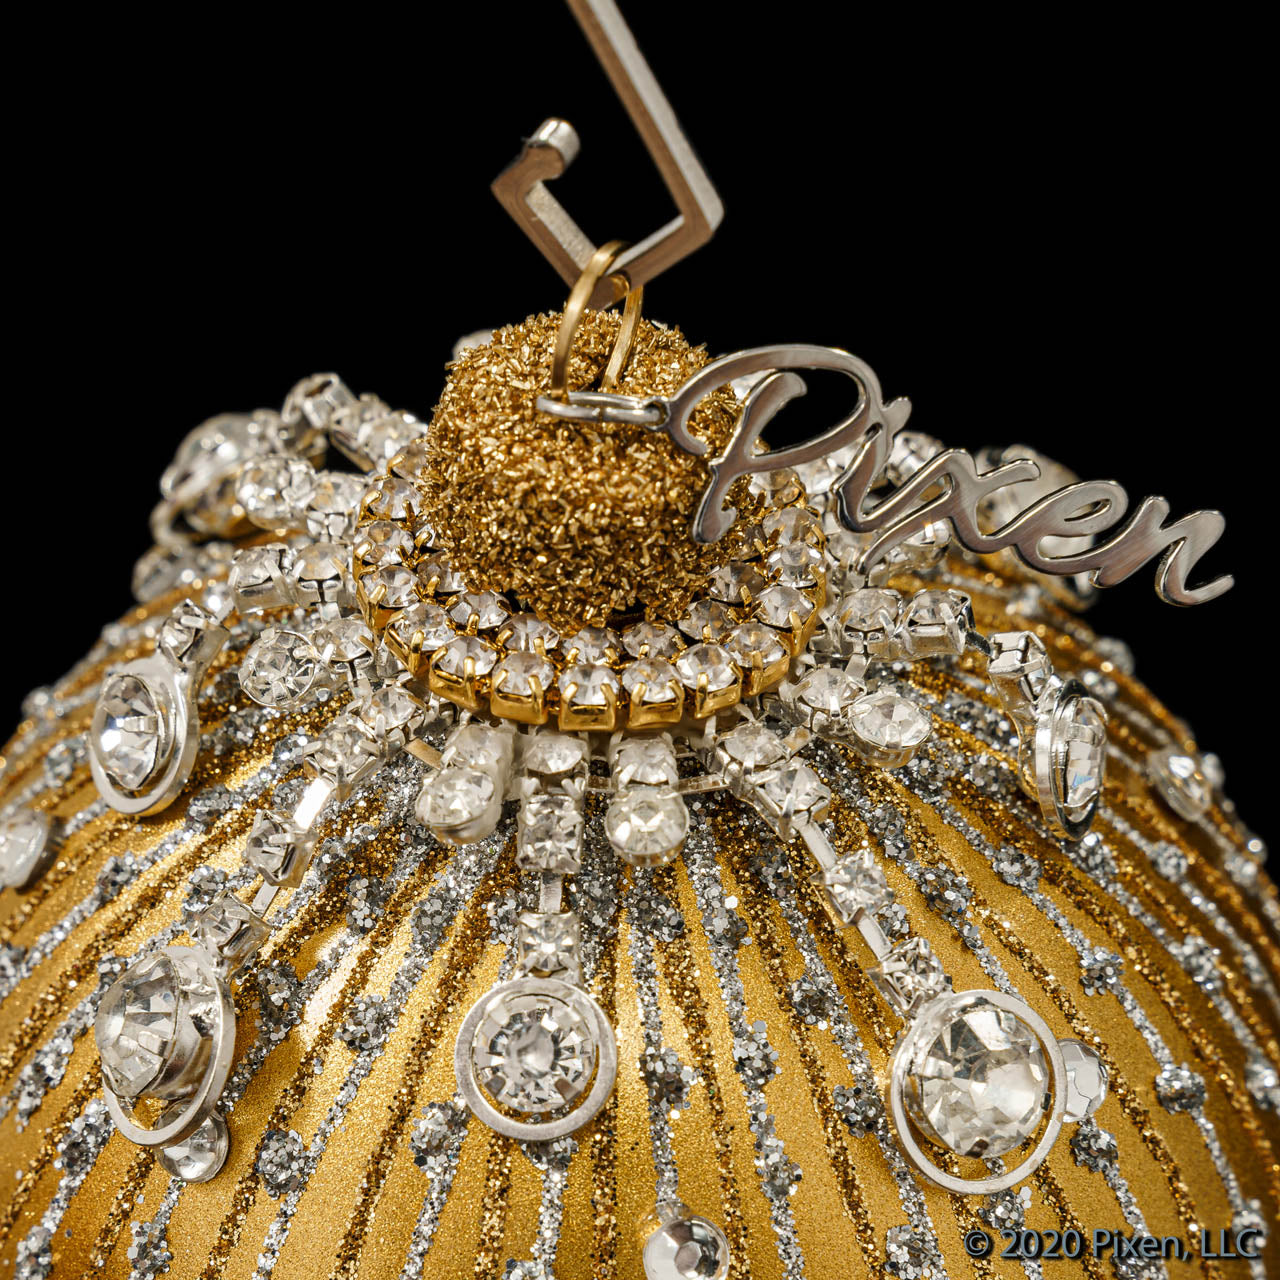 Rain Elegant Christmas Ornament in gold by Pixen